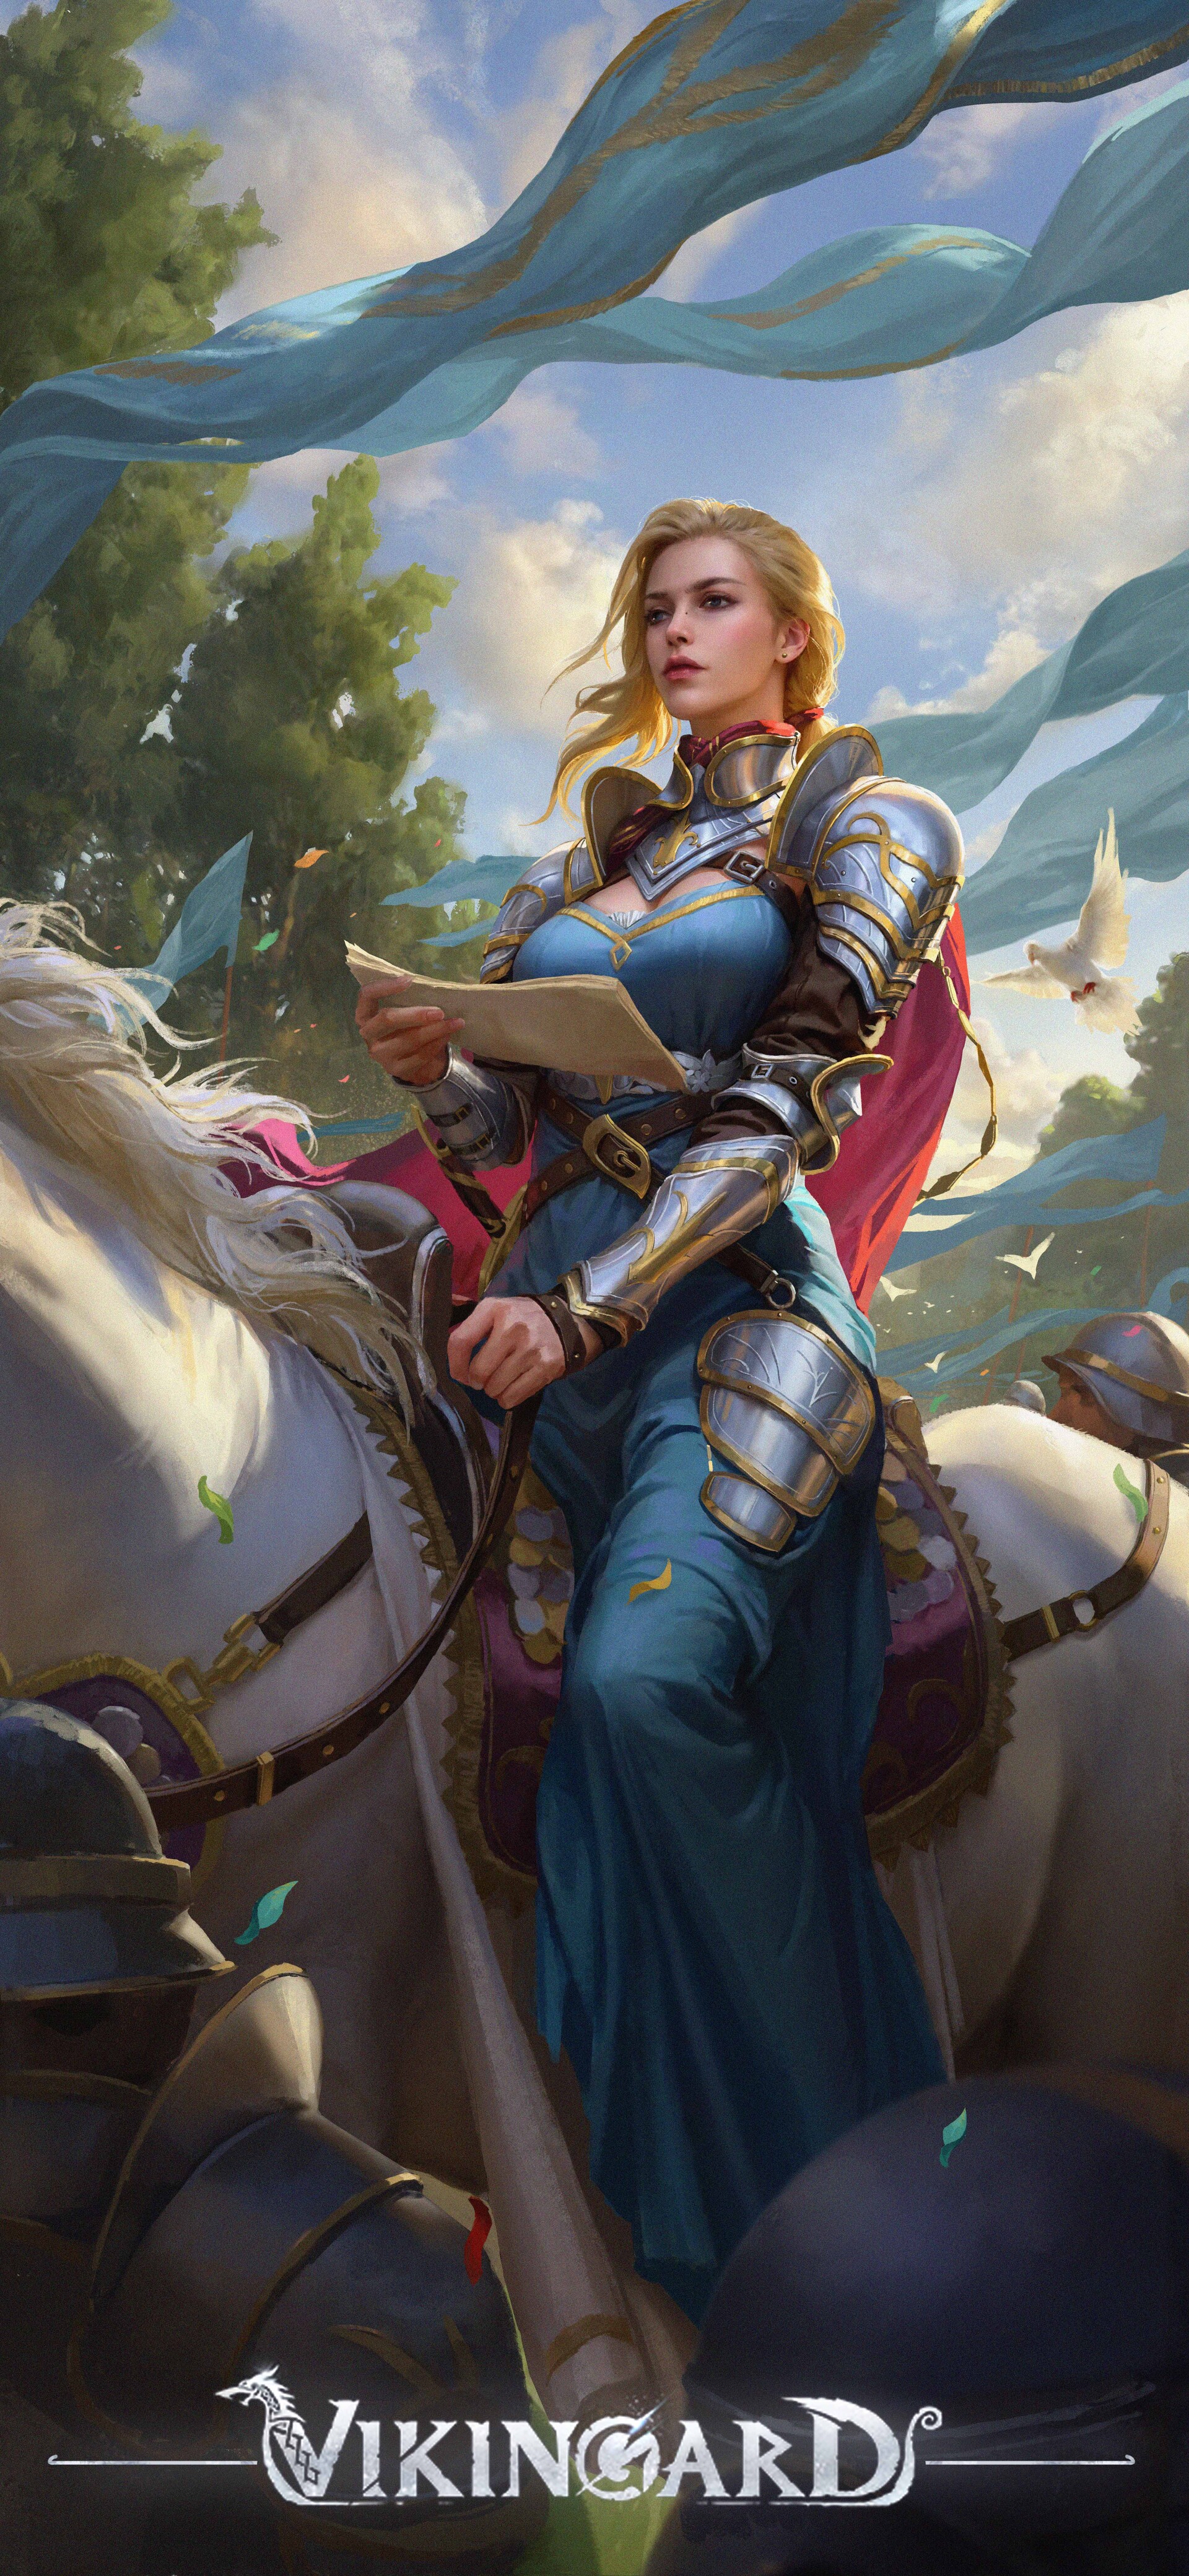 General 1920x4160 Ayao Yao drawing women horse riding knight blonde portrait display digital art